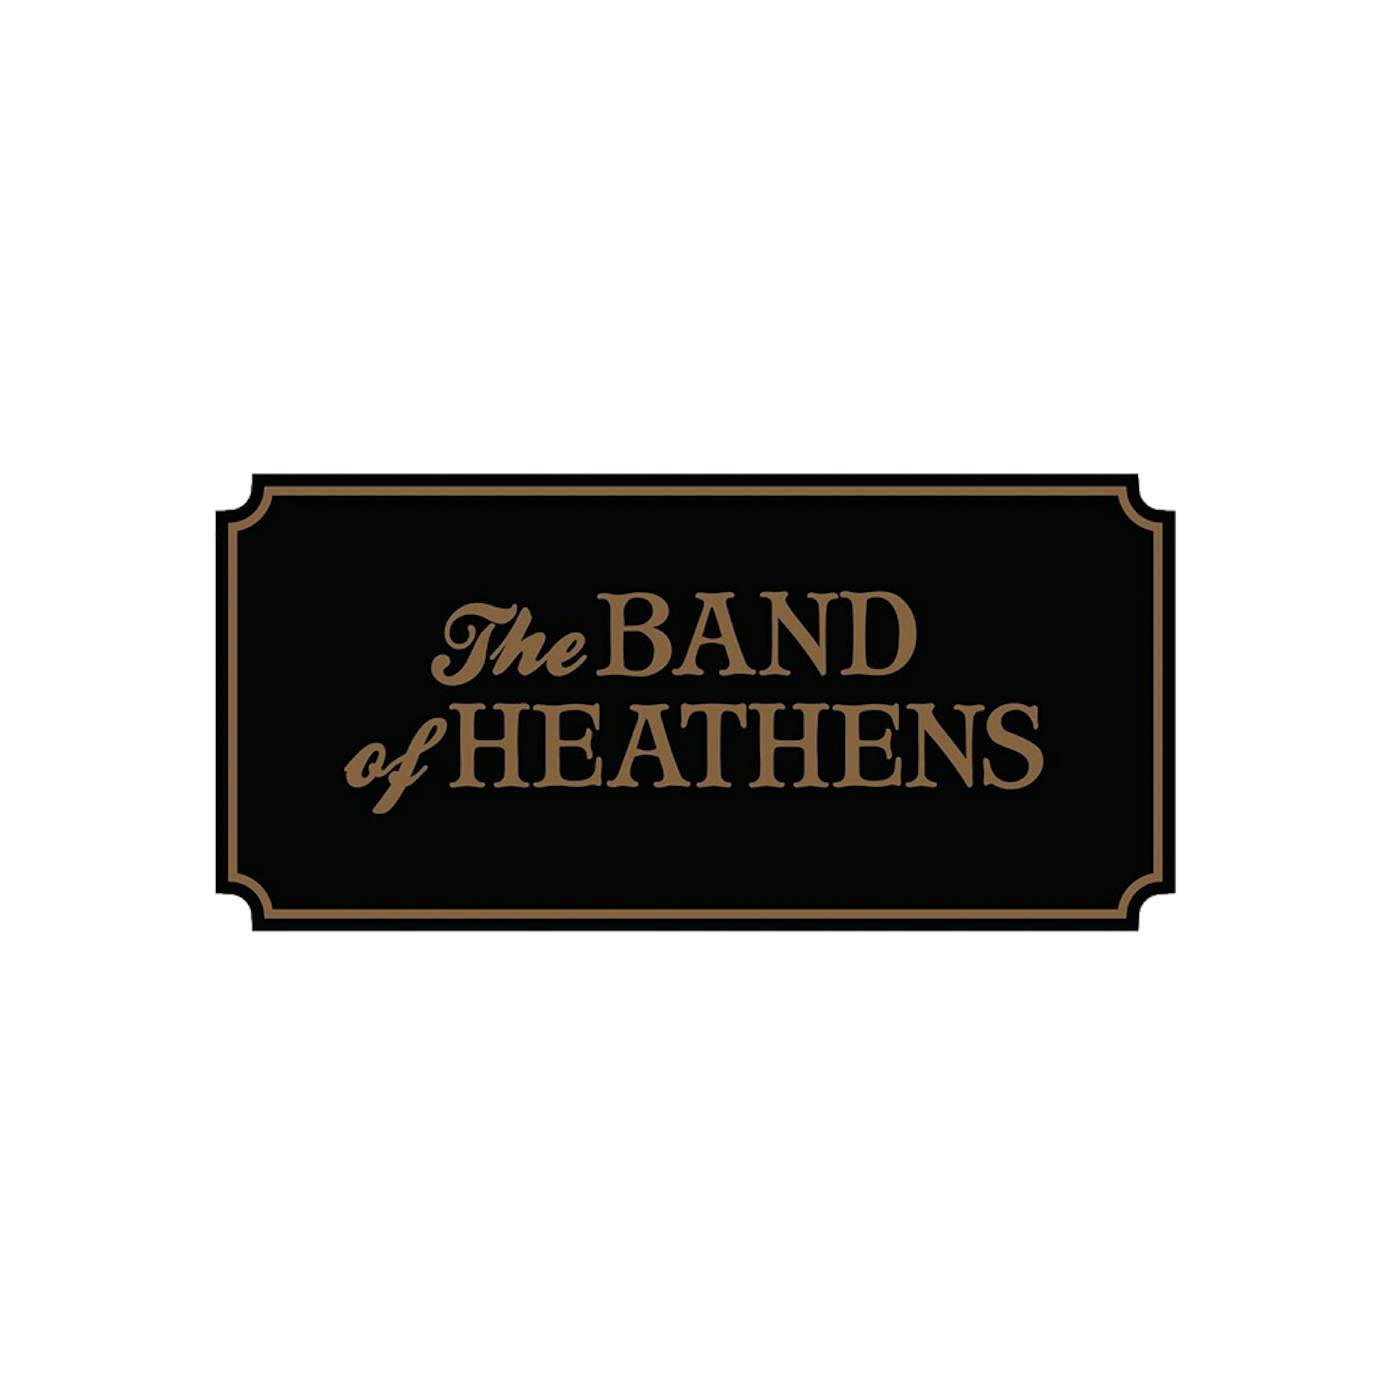 The Band of Heathens Badge Sticker